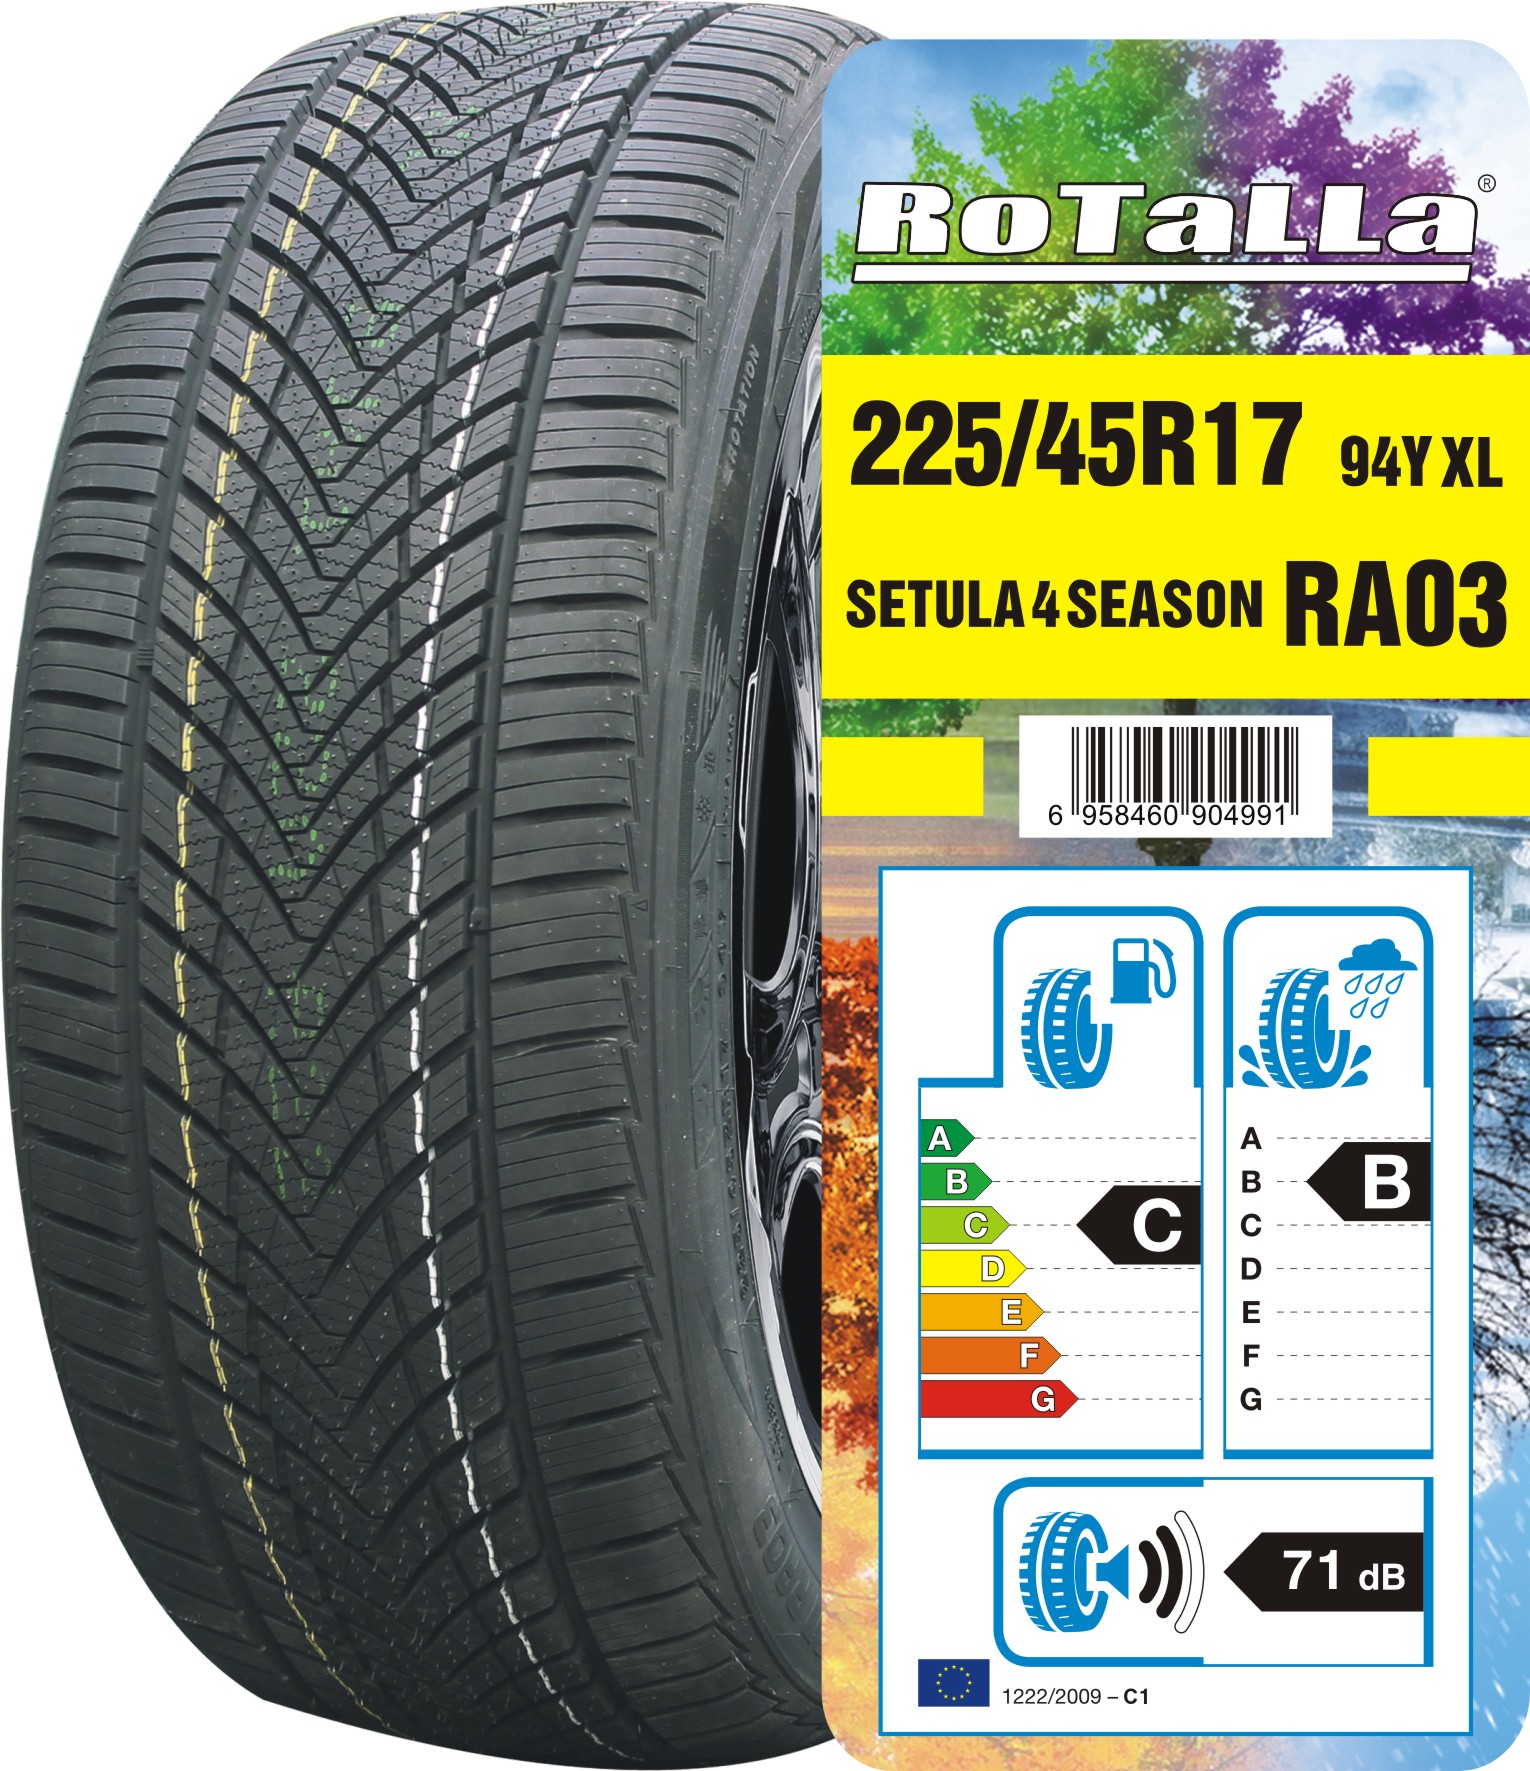 Rotalla all-season, winter tyres get their European debut